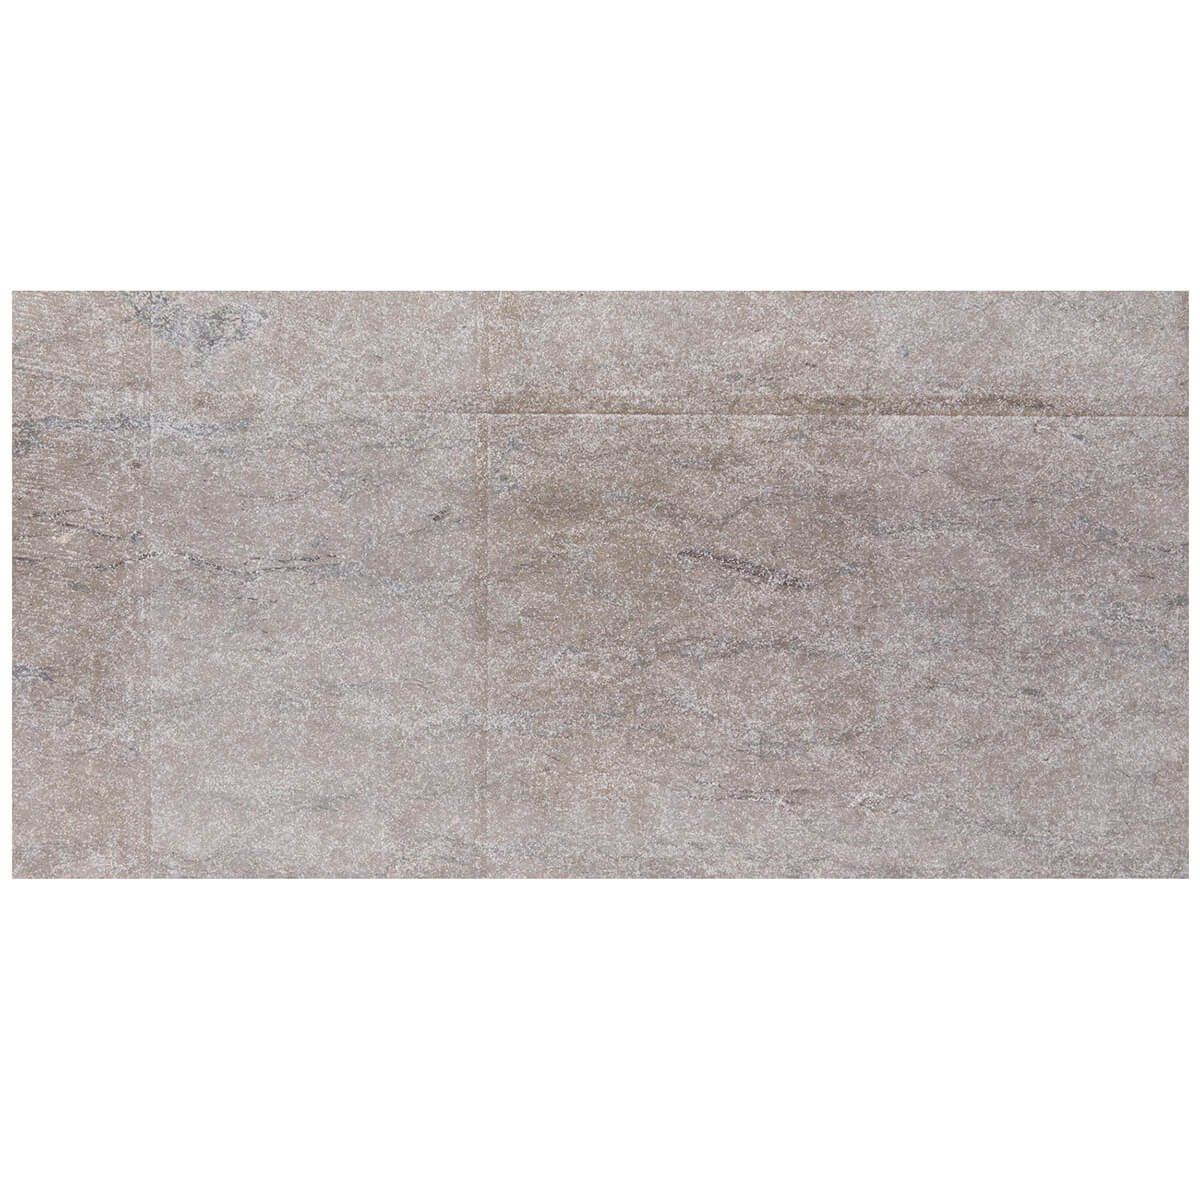 haussmann saint louis limestone rectangle natural stone field tile 12x24 heritage finish